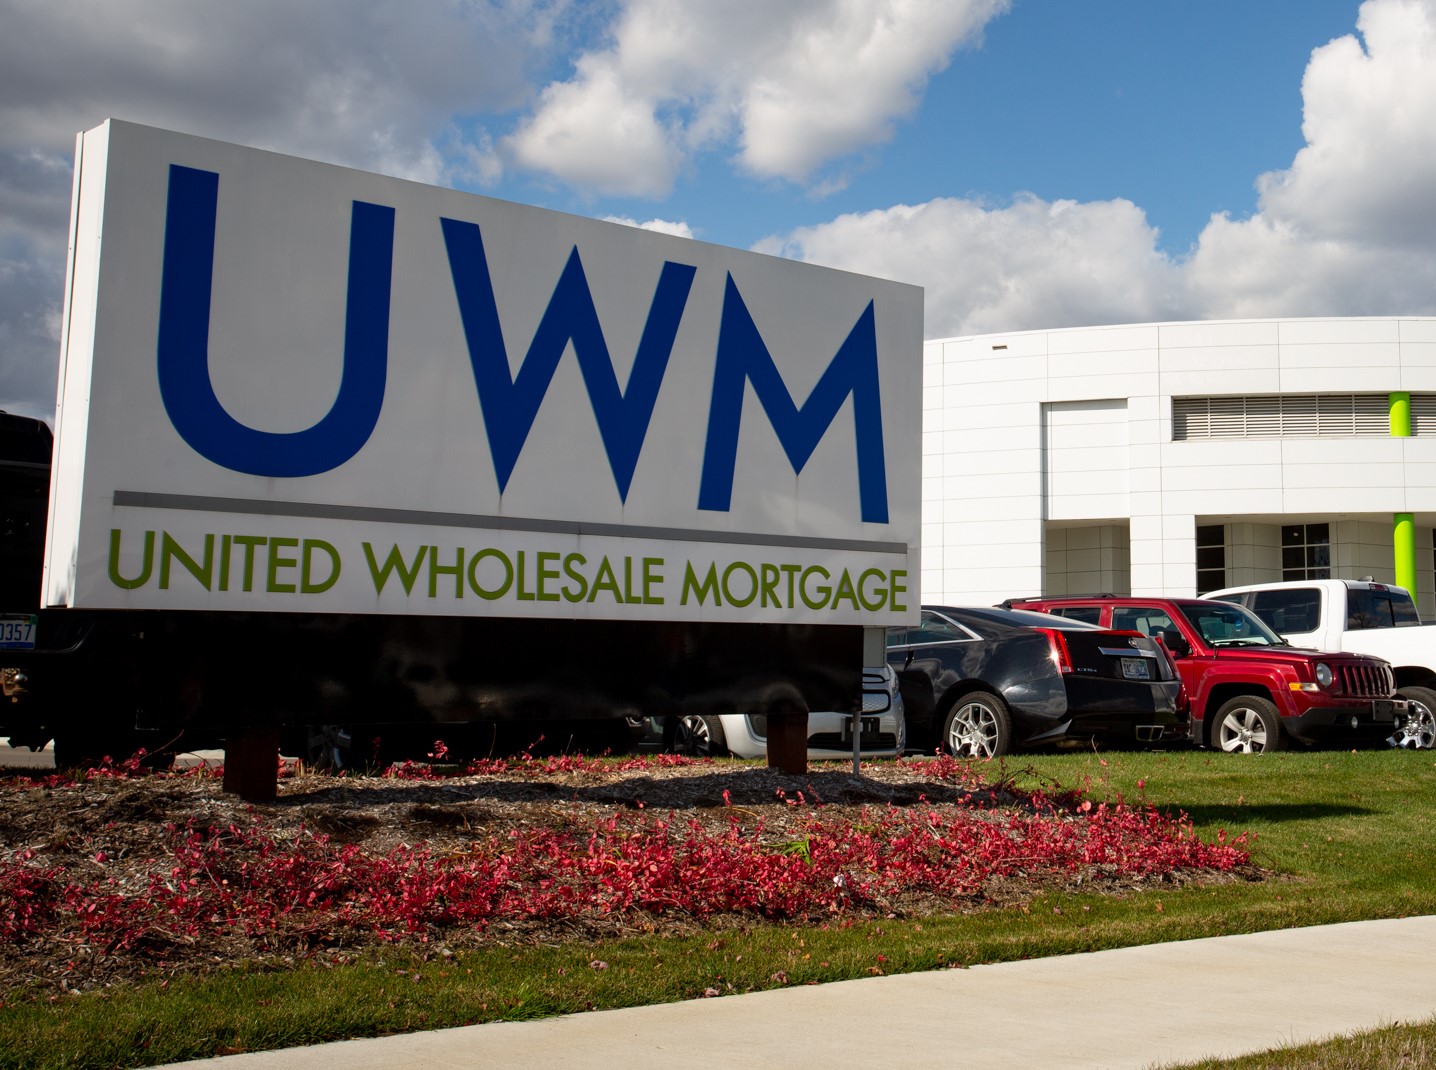 Judge Finds UWM Engaged In Unfair Labor Practices